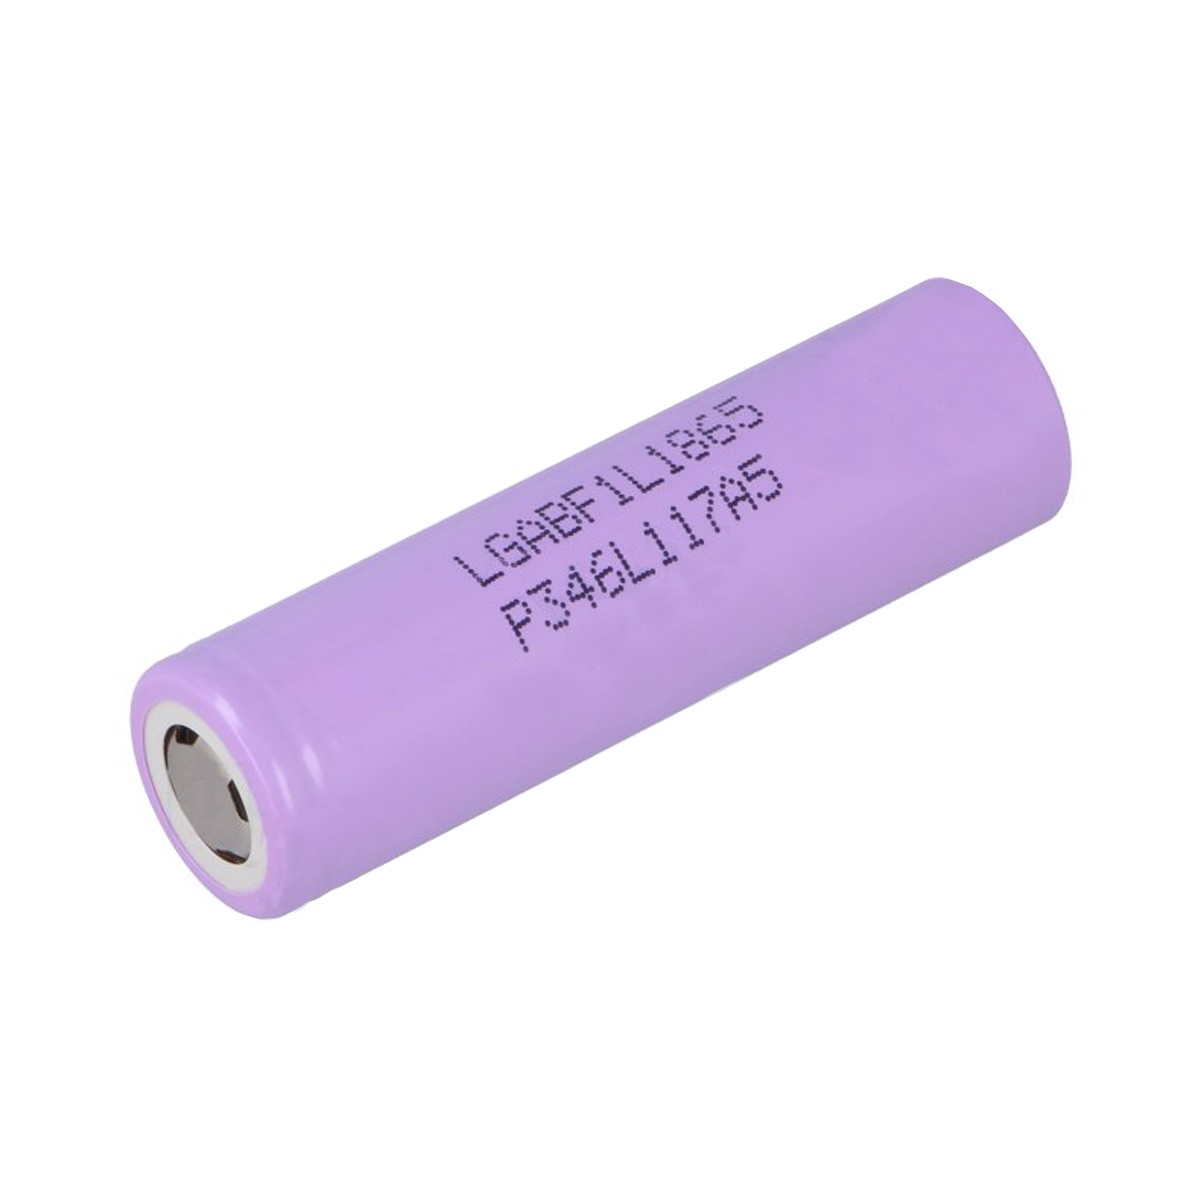 LG ELECTRONICS NR18650 Lithium-Ion Accumulator 18650 Battery 3.6V 3350mAh Rechargeable - Audiophonics